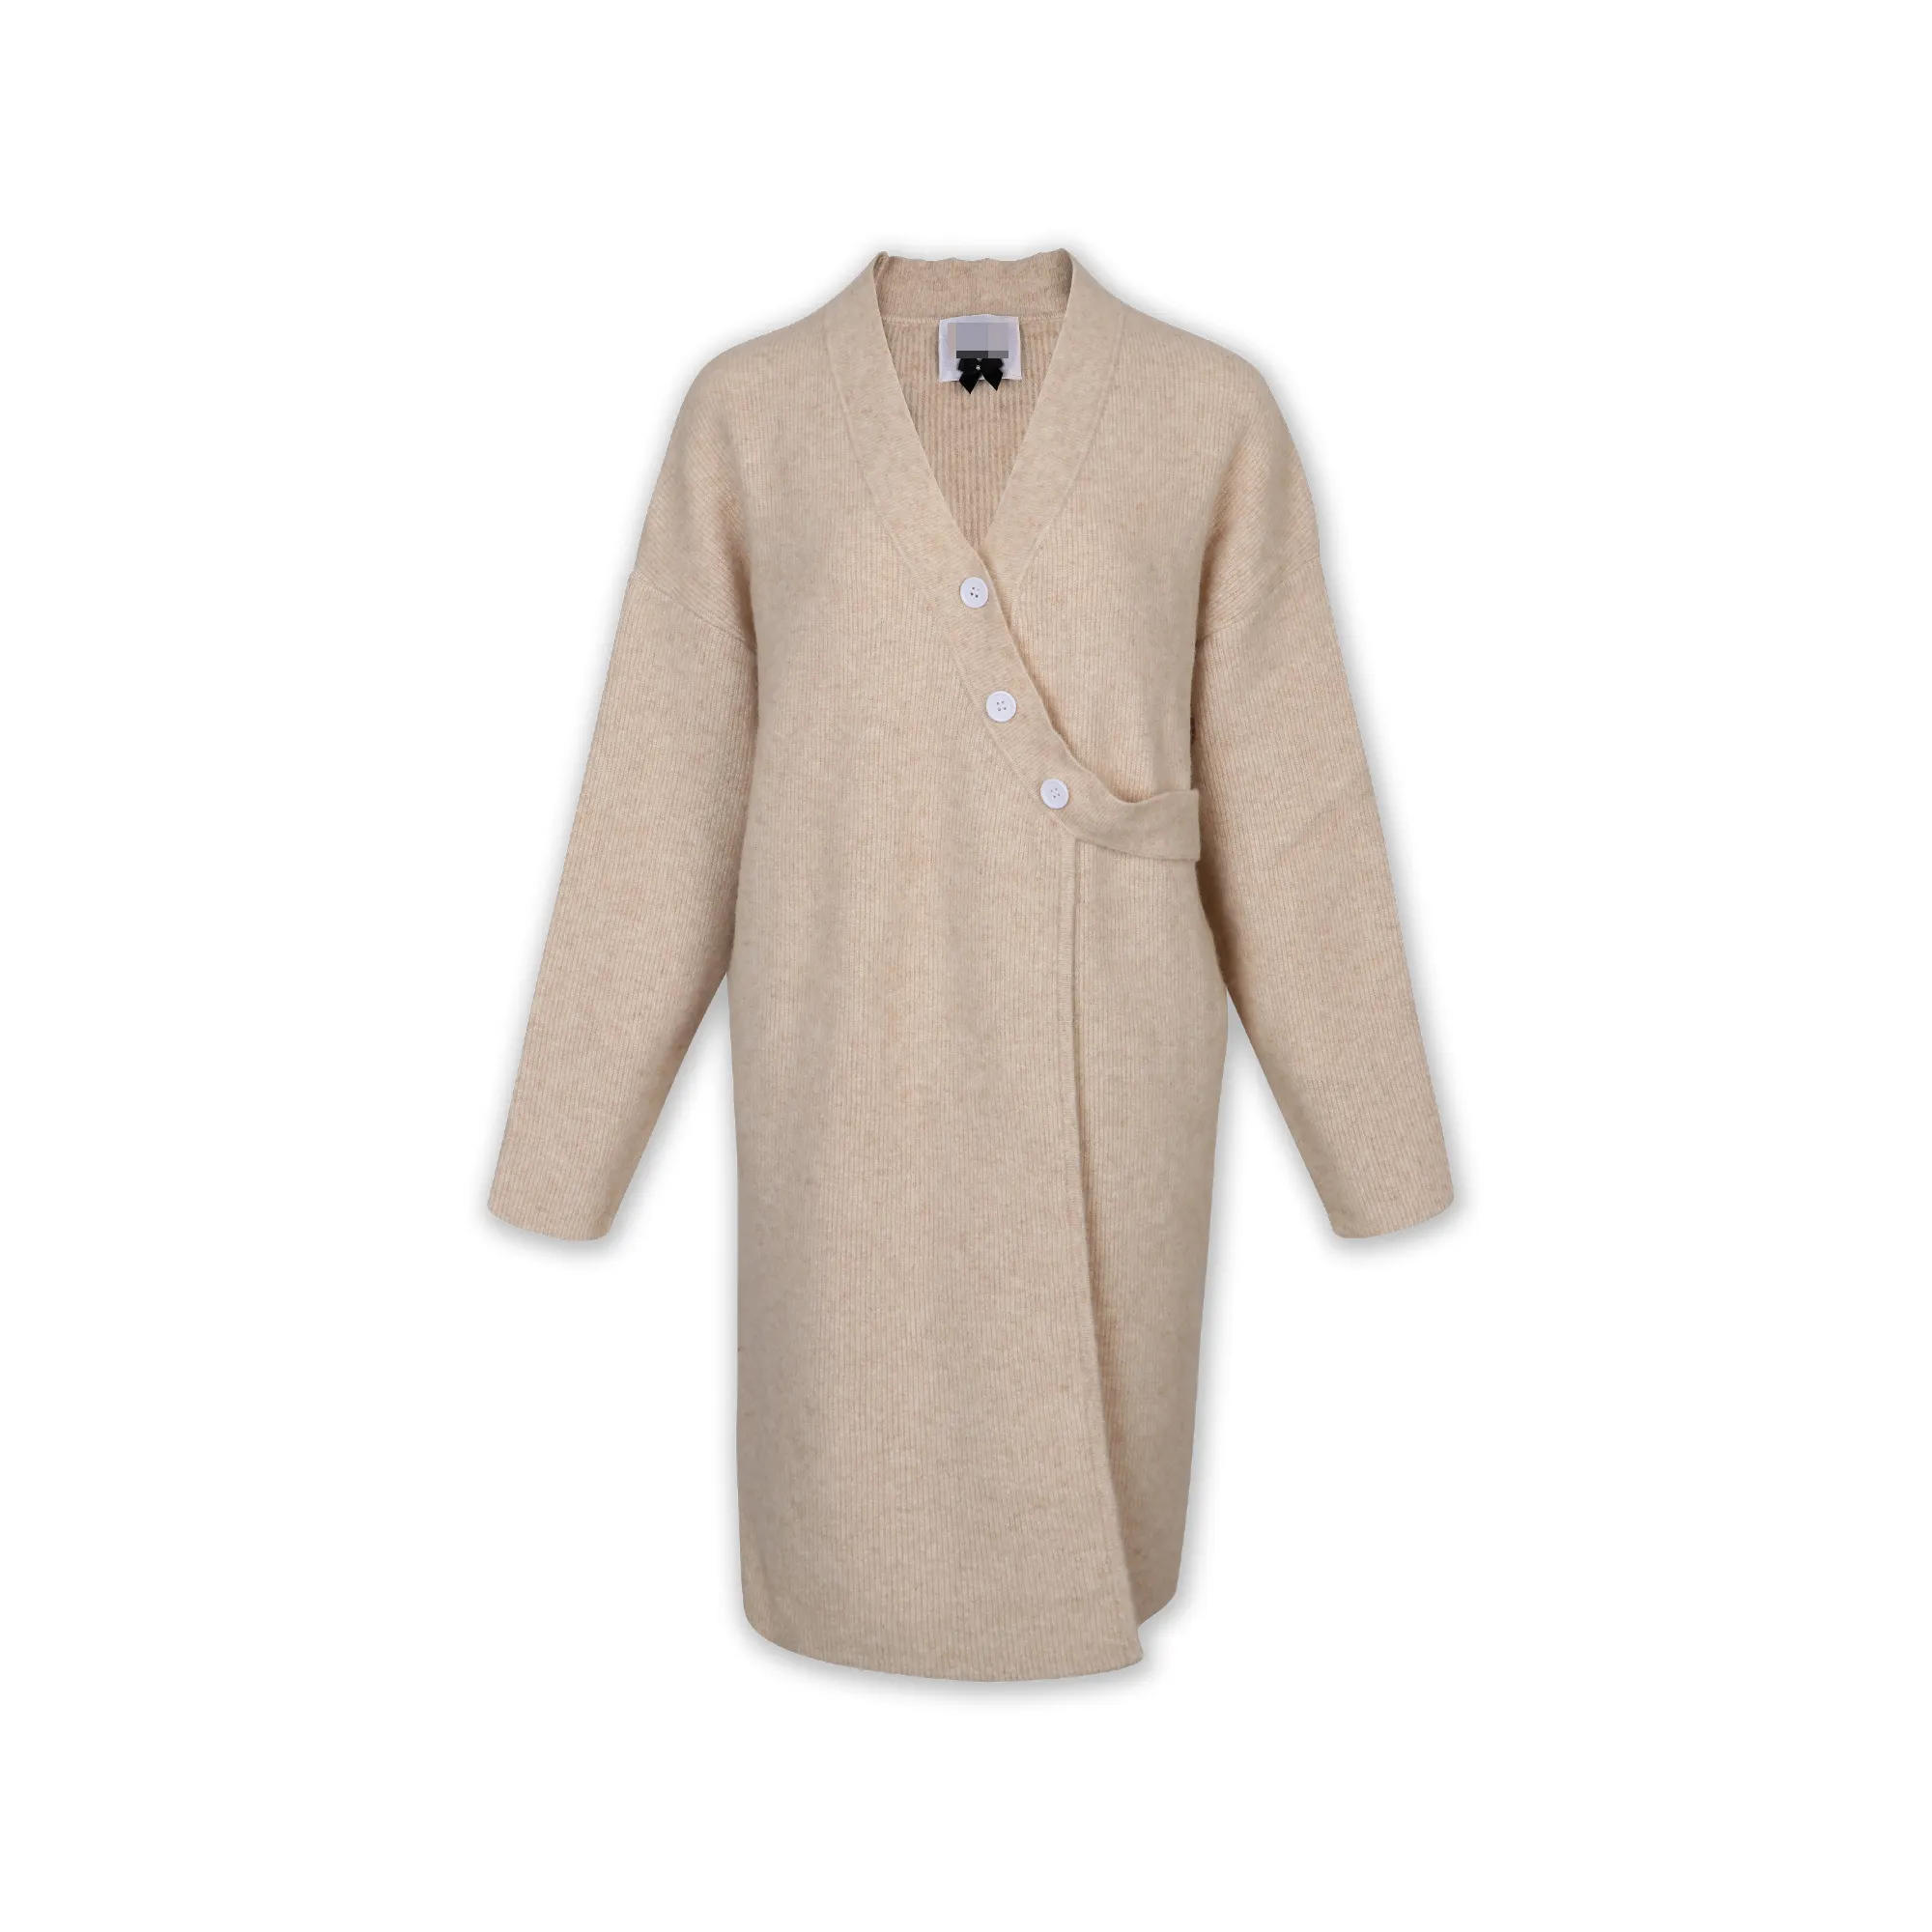 New Special Design V Neck Long Sleeve Women Long Wrap Cardigan Dress Sweater